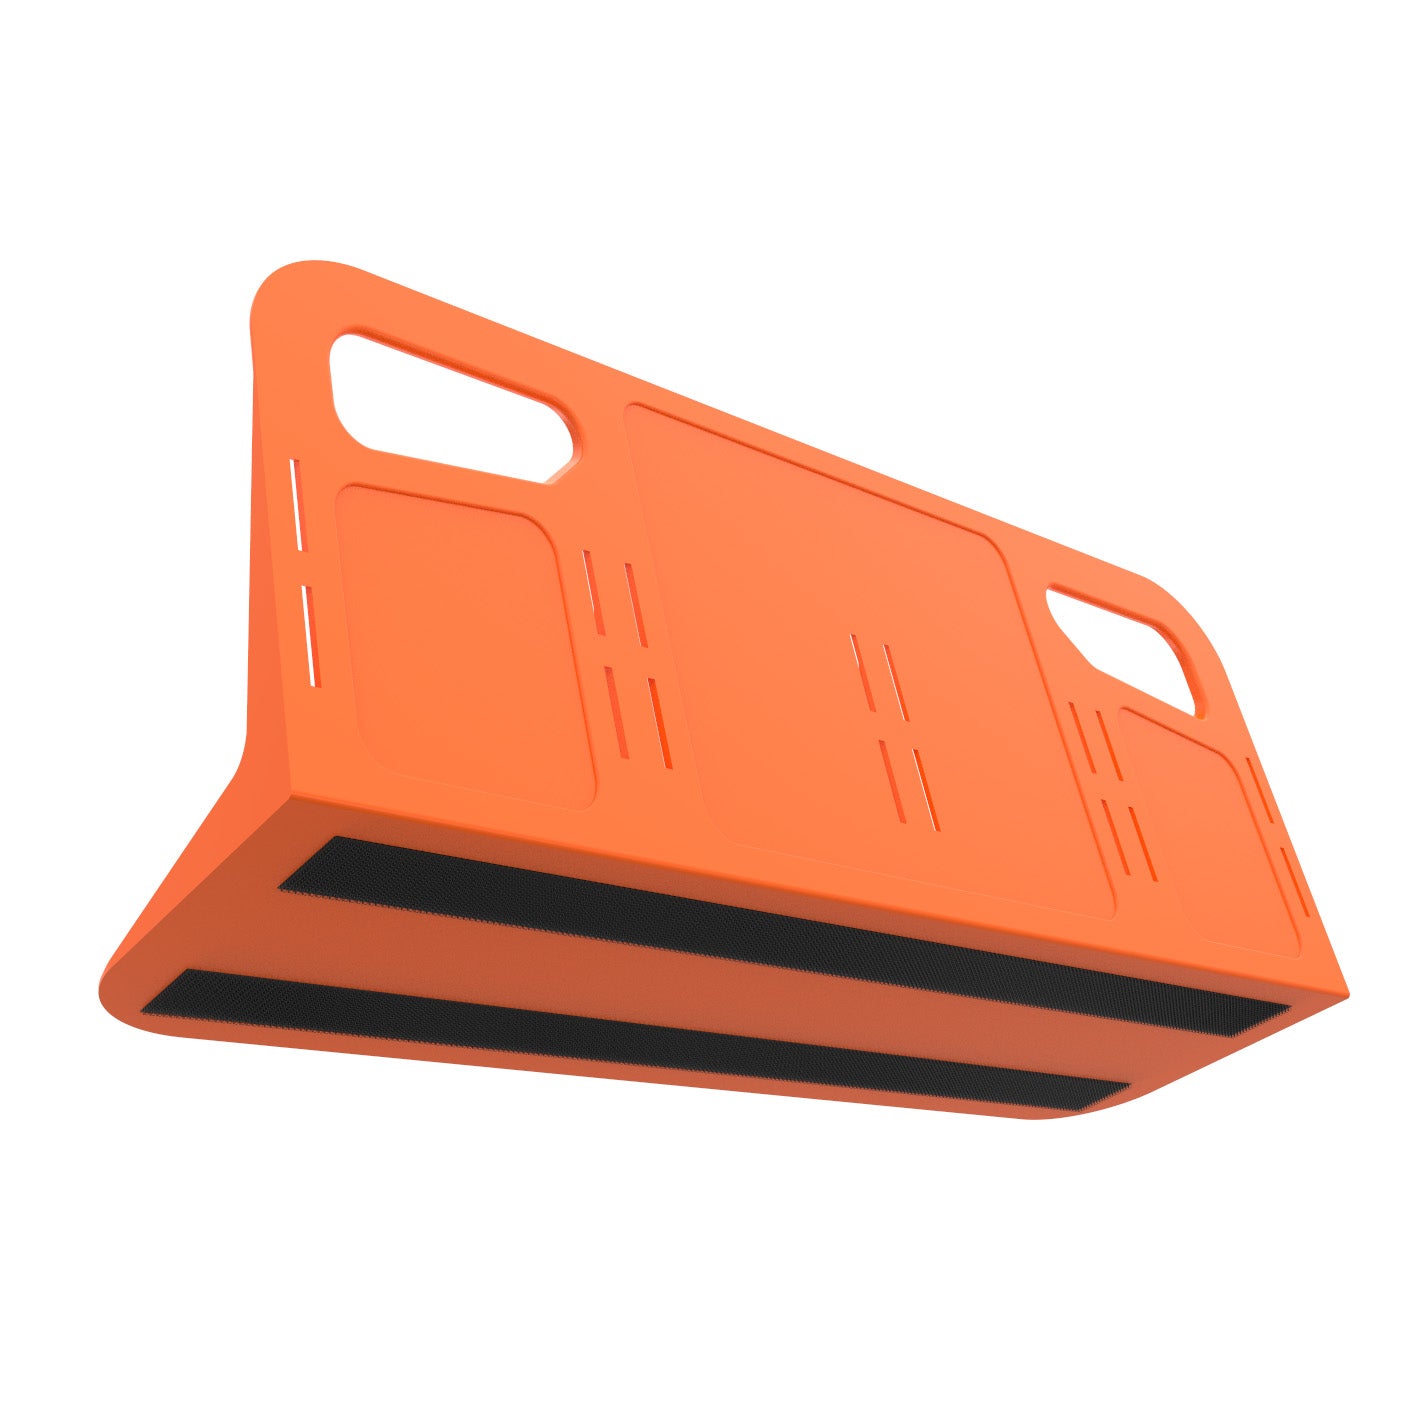 Stayhold CLASSIC™ shopping holder in orange (orange)